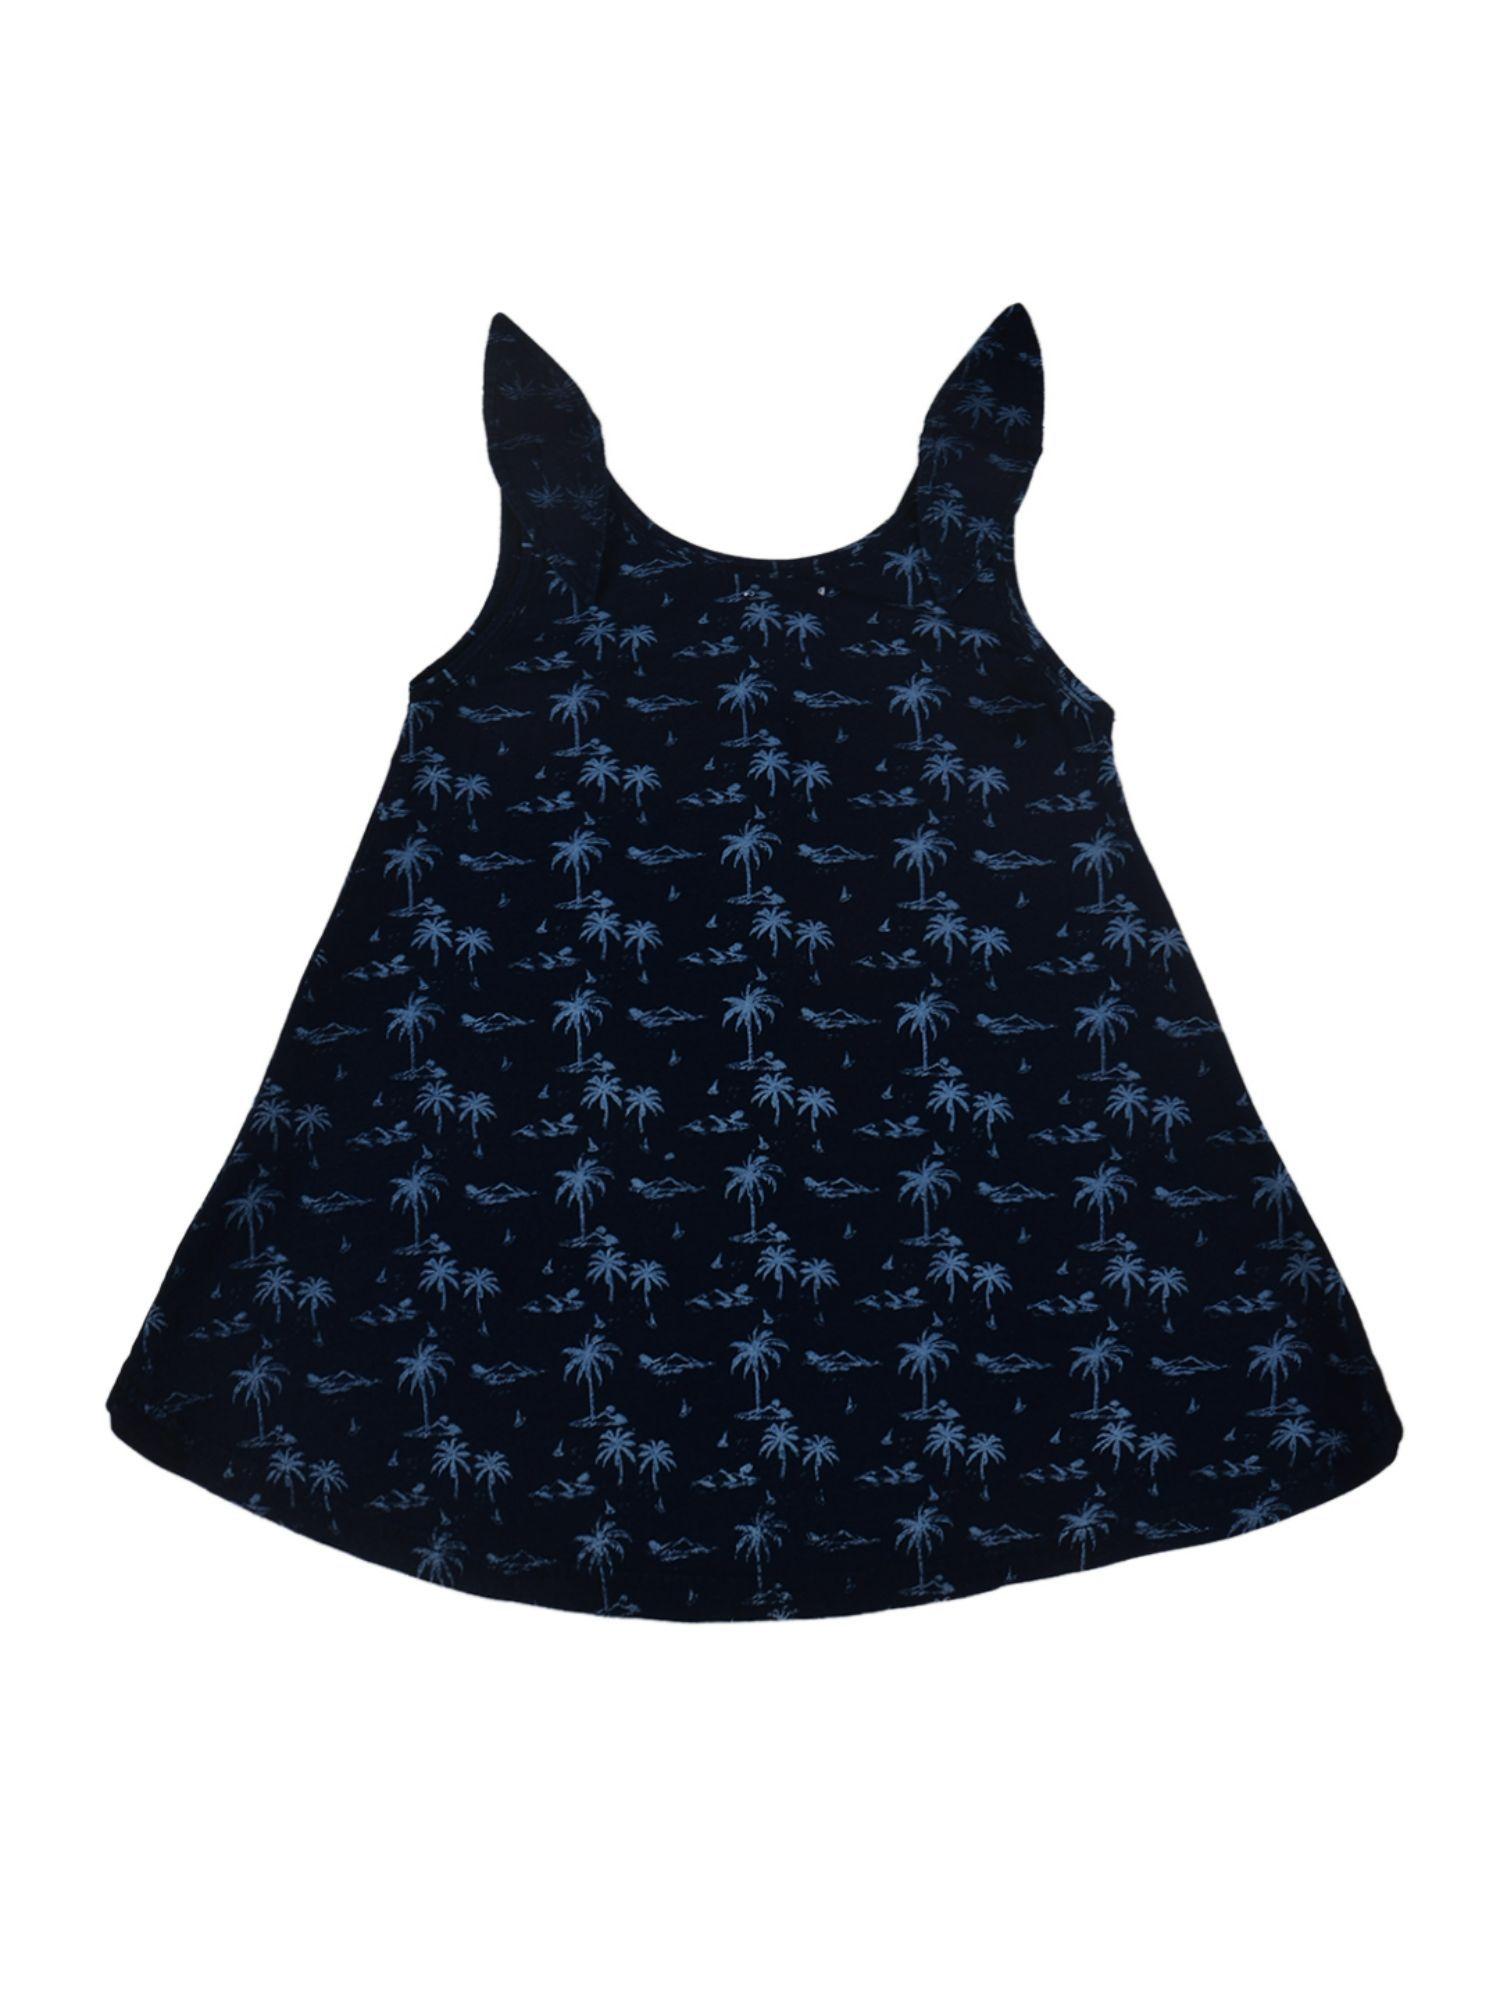 Girls Navy Blue Cotton Printed Knits Top